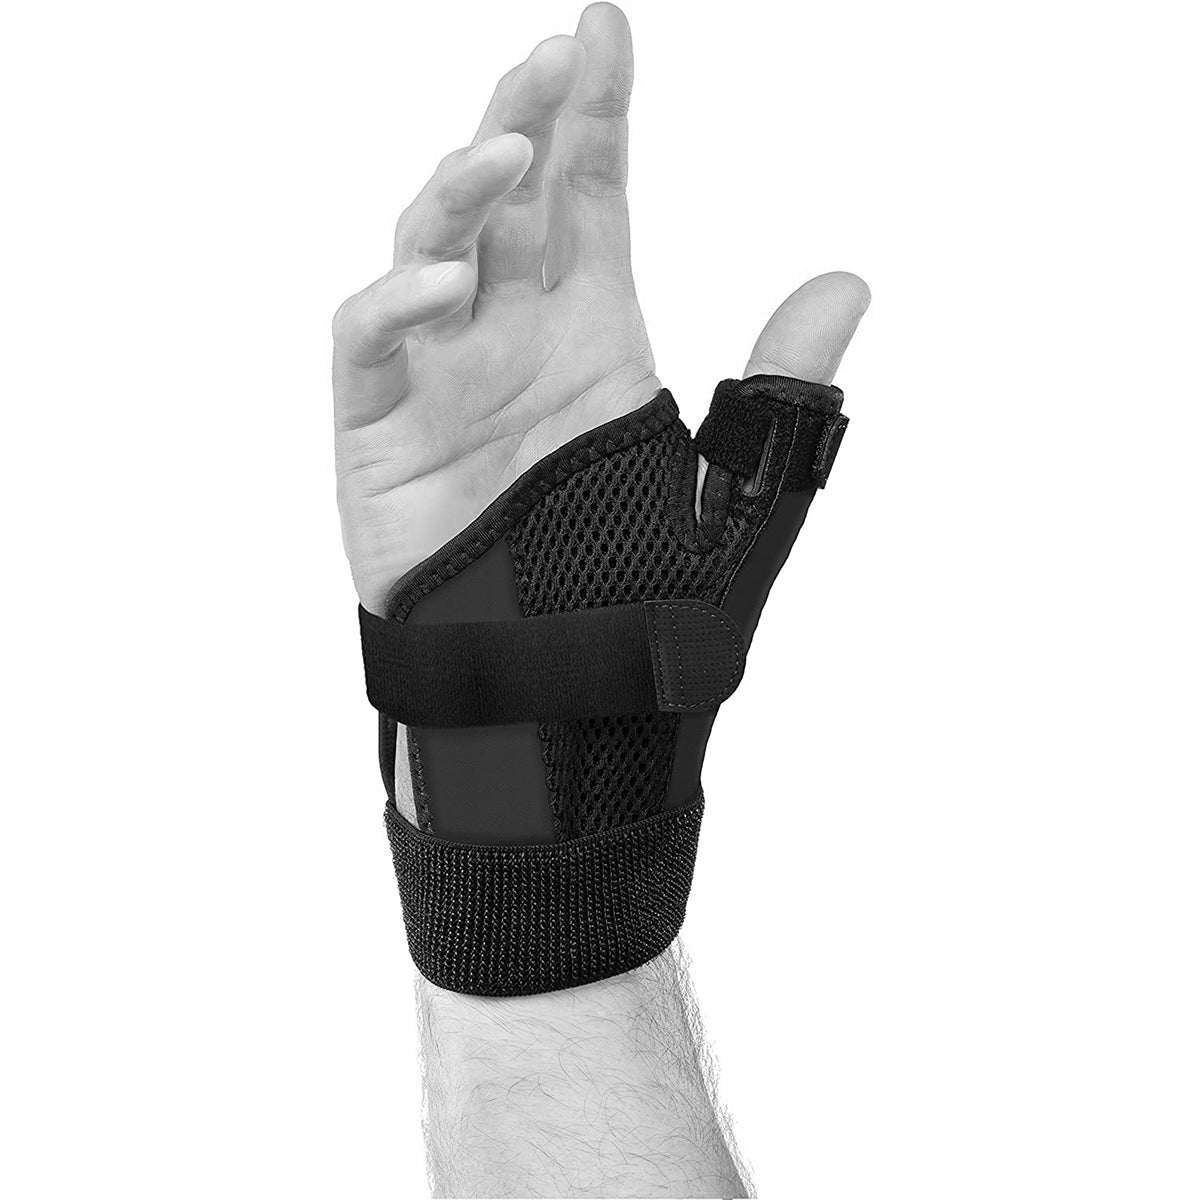 Mueller Reversible Thumb Wrist Stabilizer